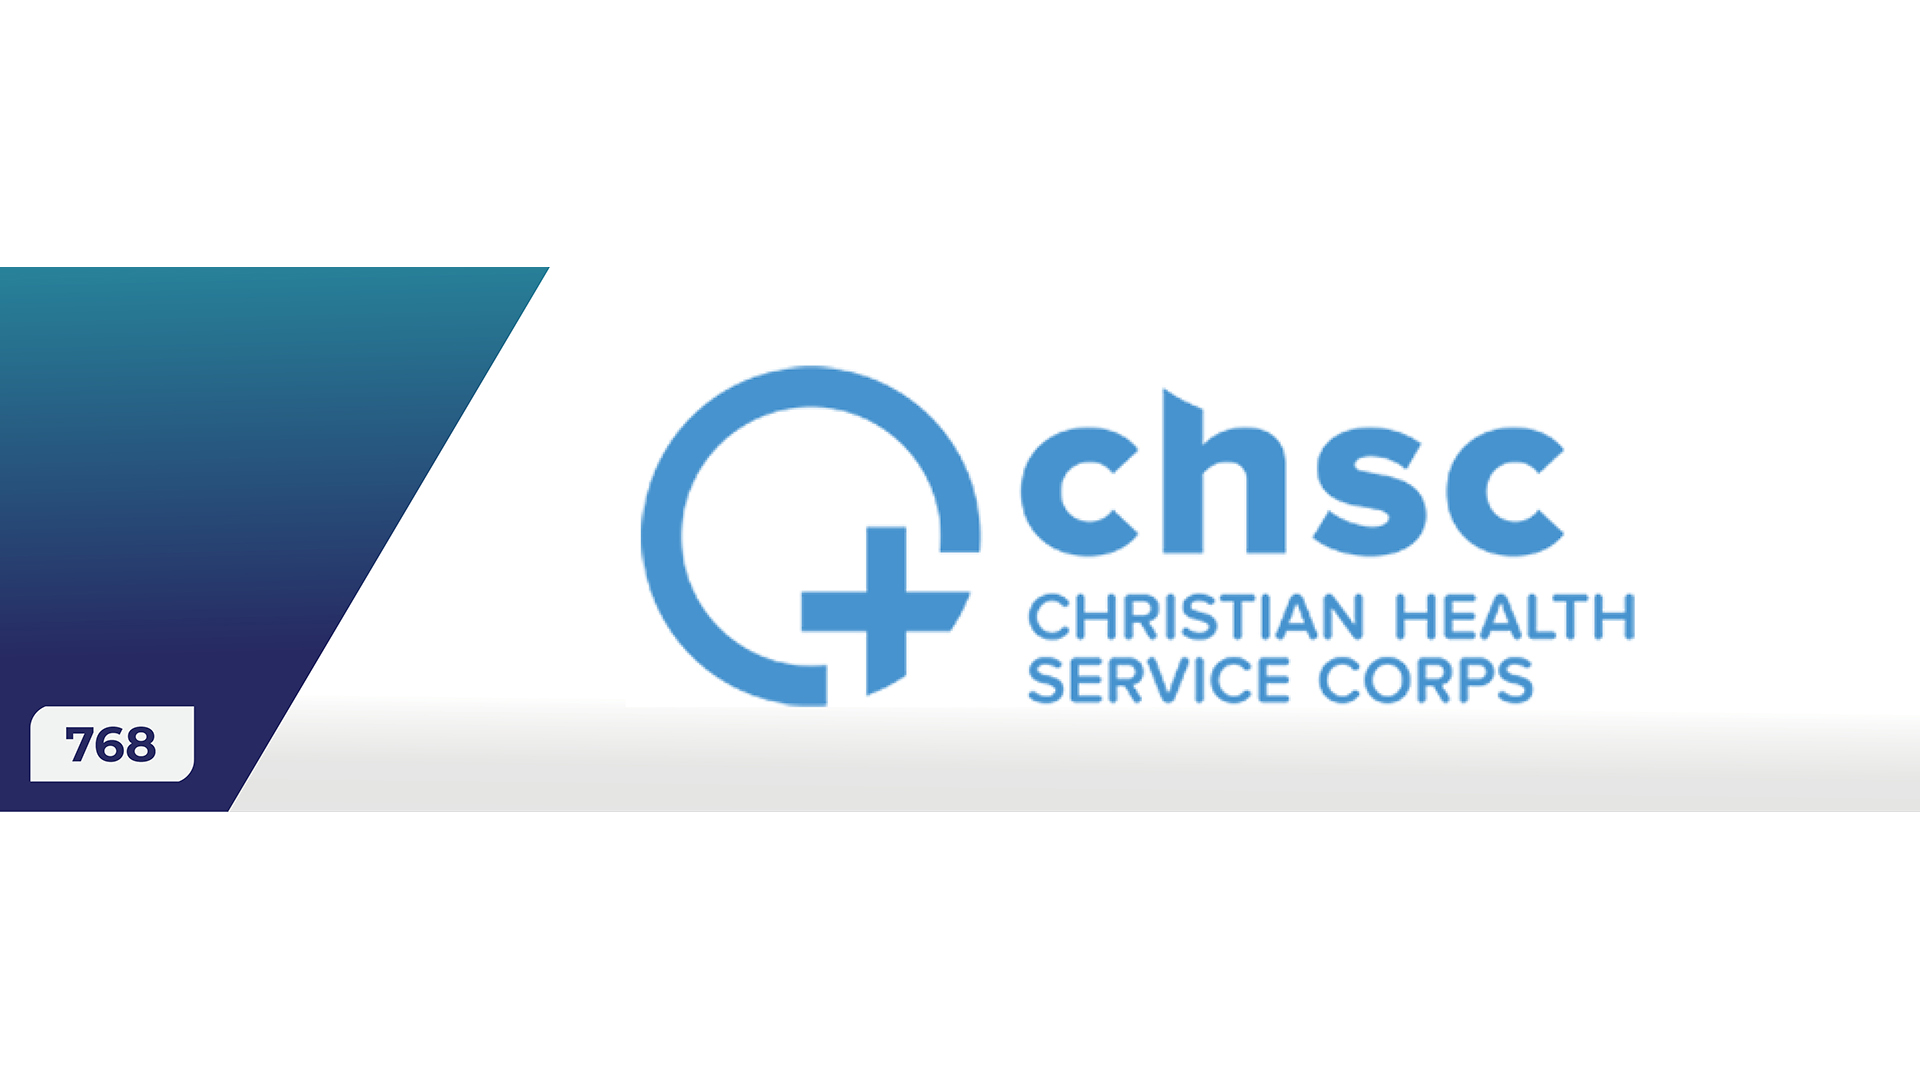 Christian Health Service Corps logo